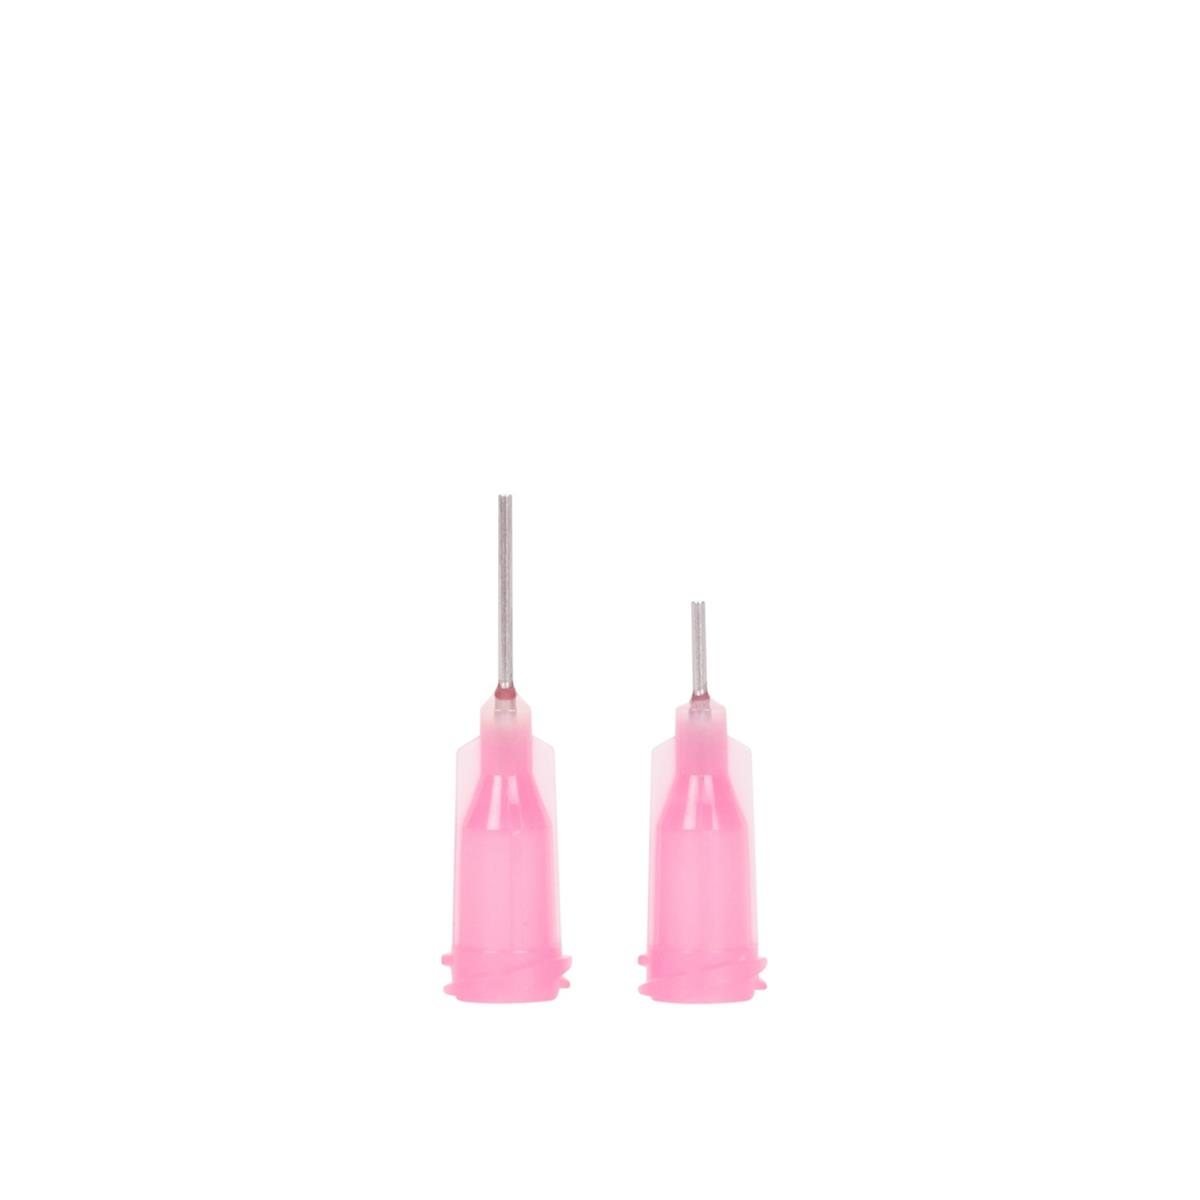 Sterile High Precision Blunt Needles 20G, 50 pcs (0.25)